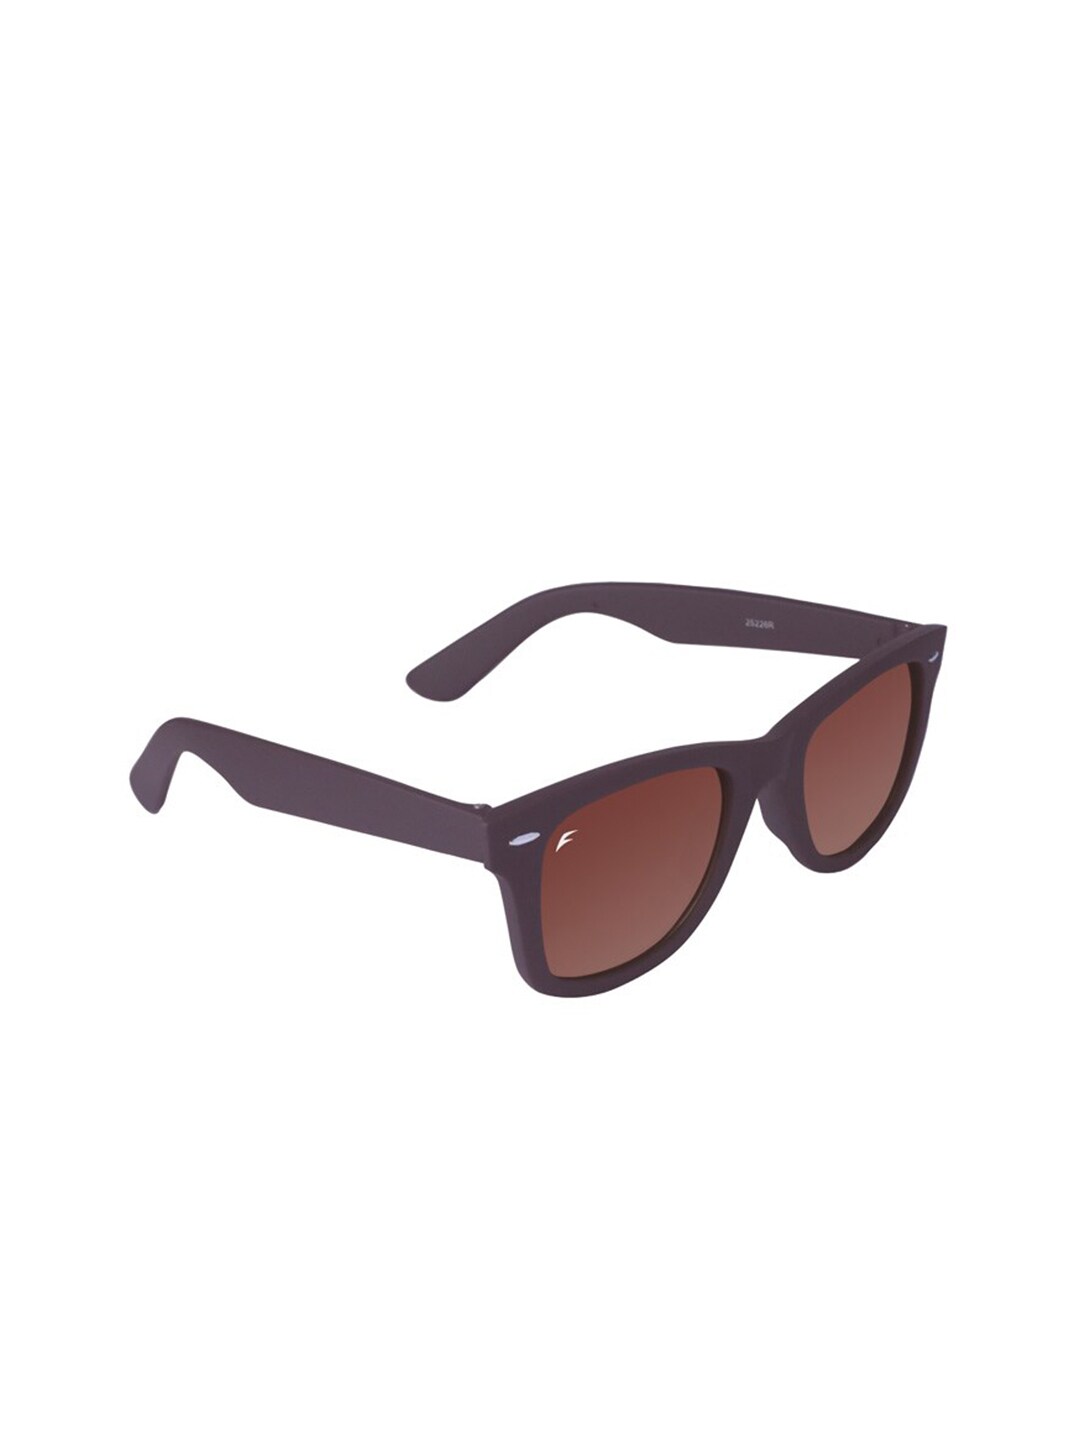 Floyd Unisex Brown Lens & Brown Wayfarer Sunglasses with UV Protected Lens